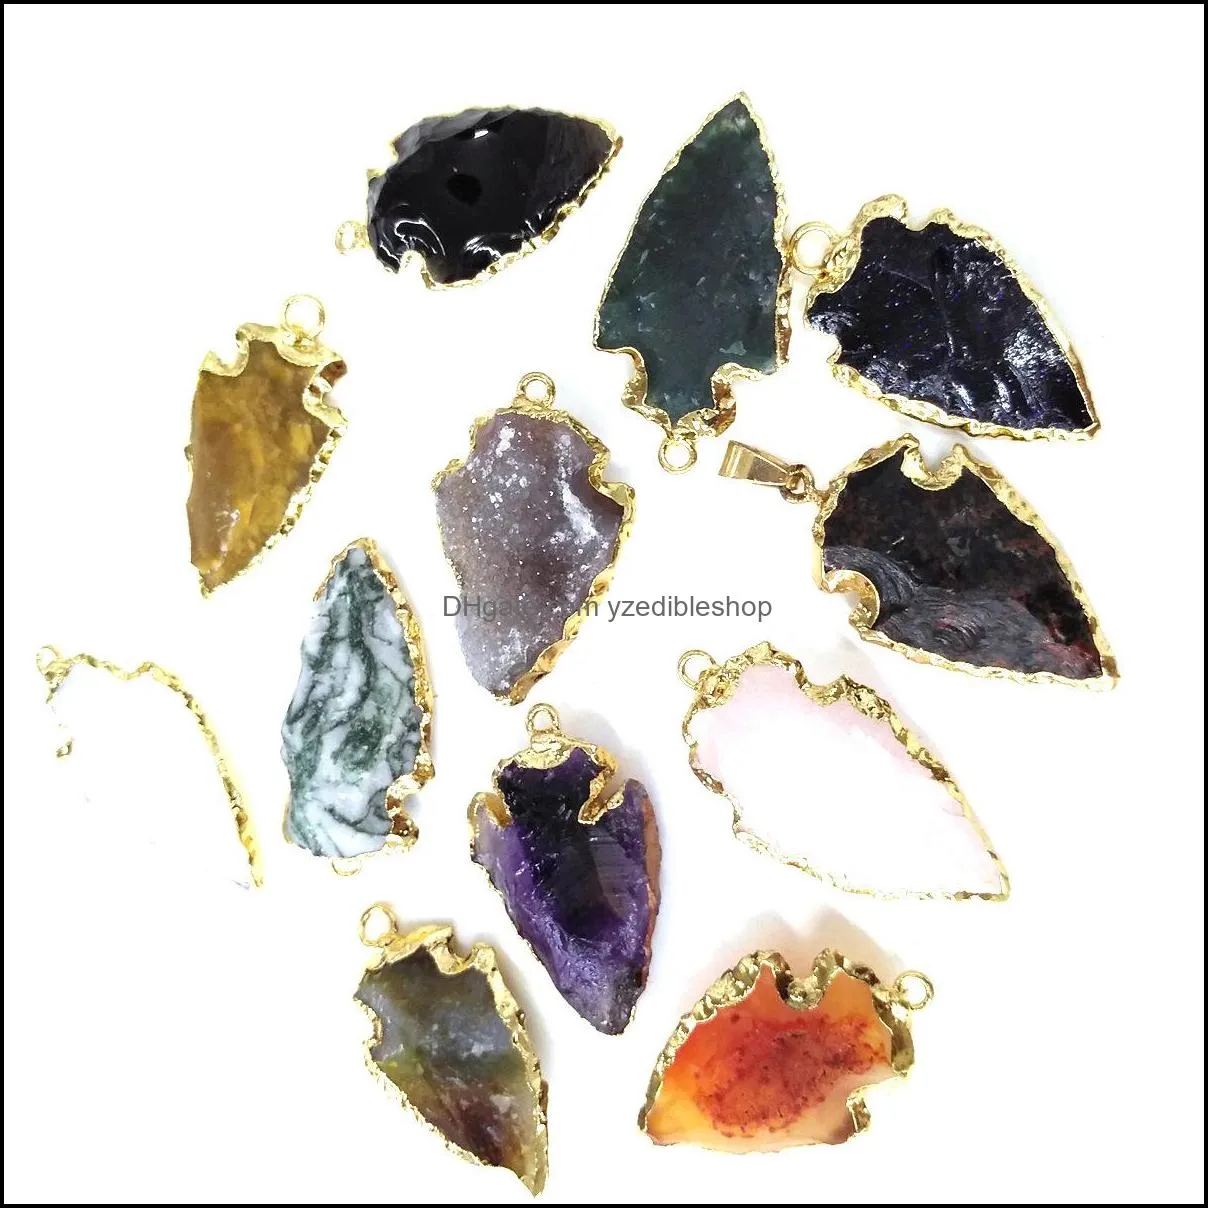 leaf arrowhead agate healing crystal pillar charm quartz blue yellow purple white semiprecious stone pendant diy jewelry making